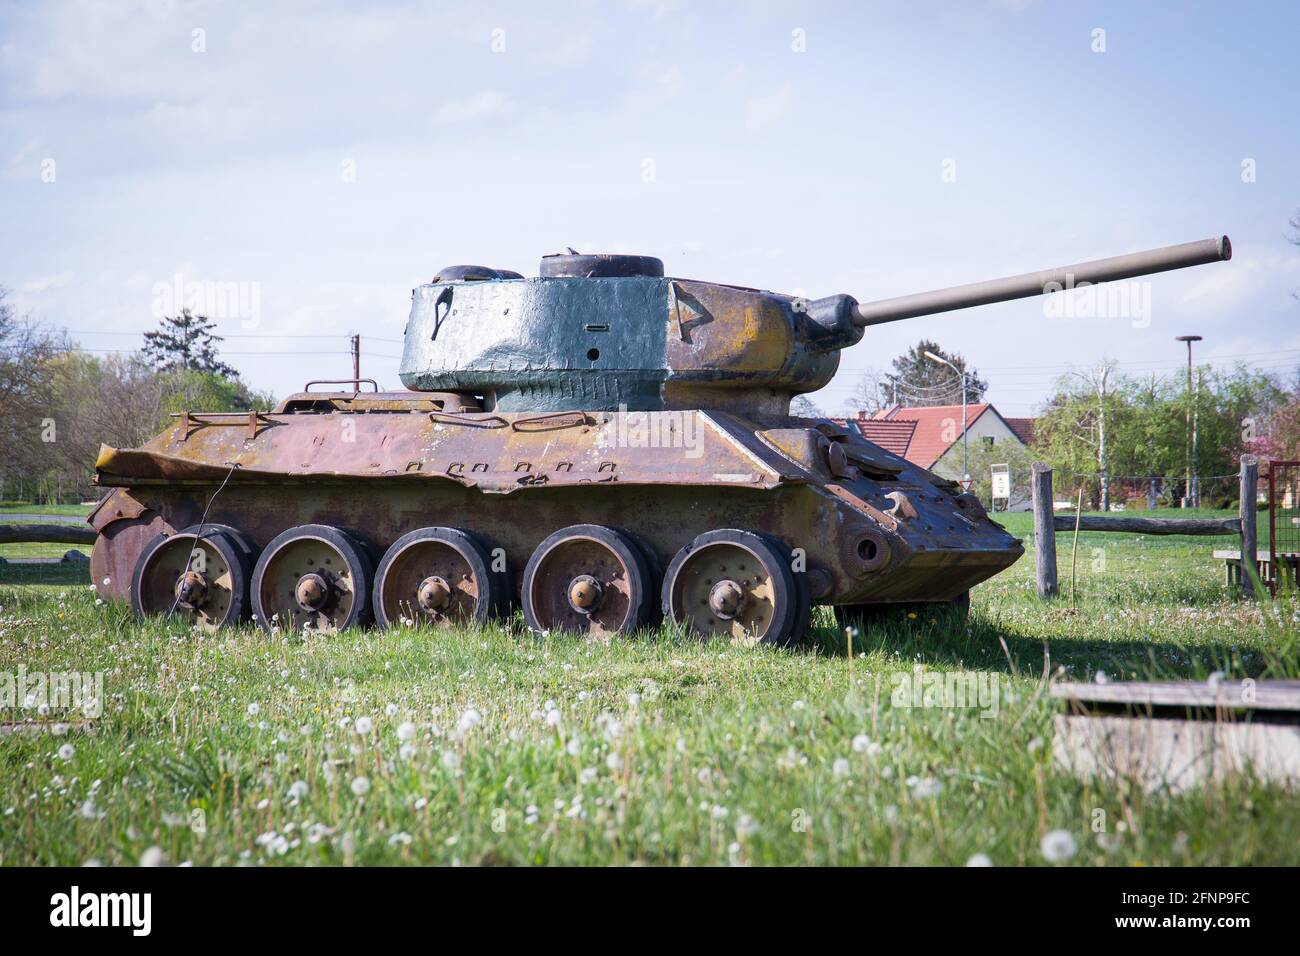 Abandoned tank from World War II Stock Photo